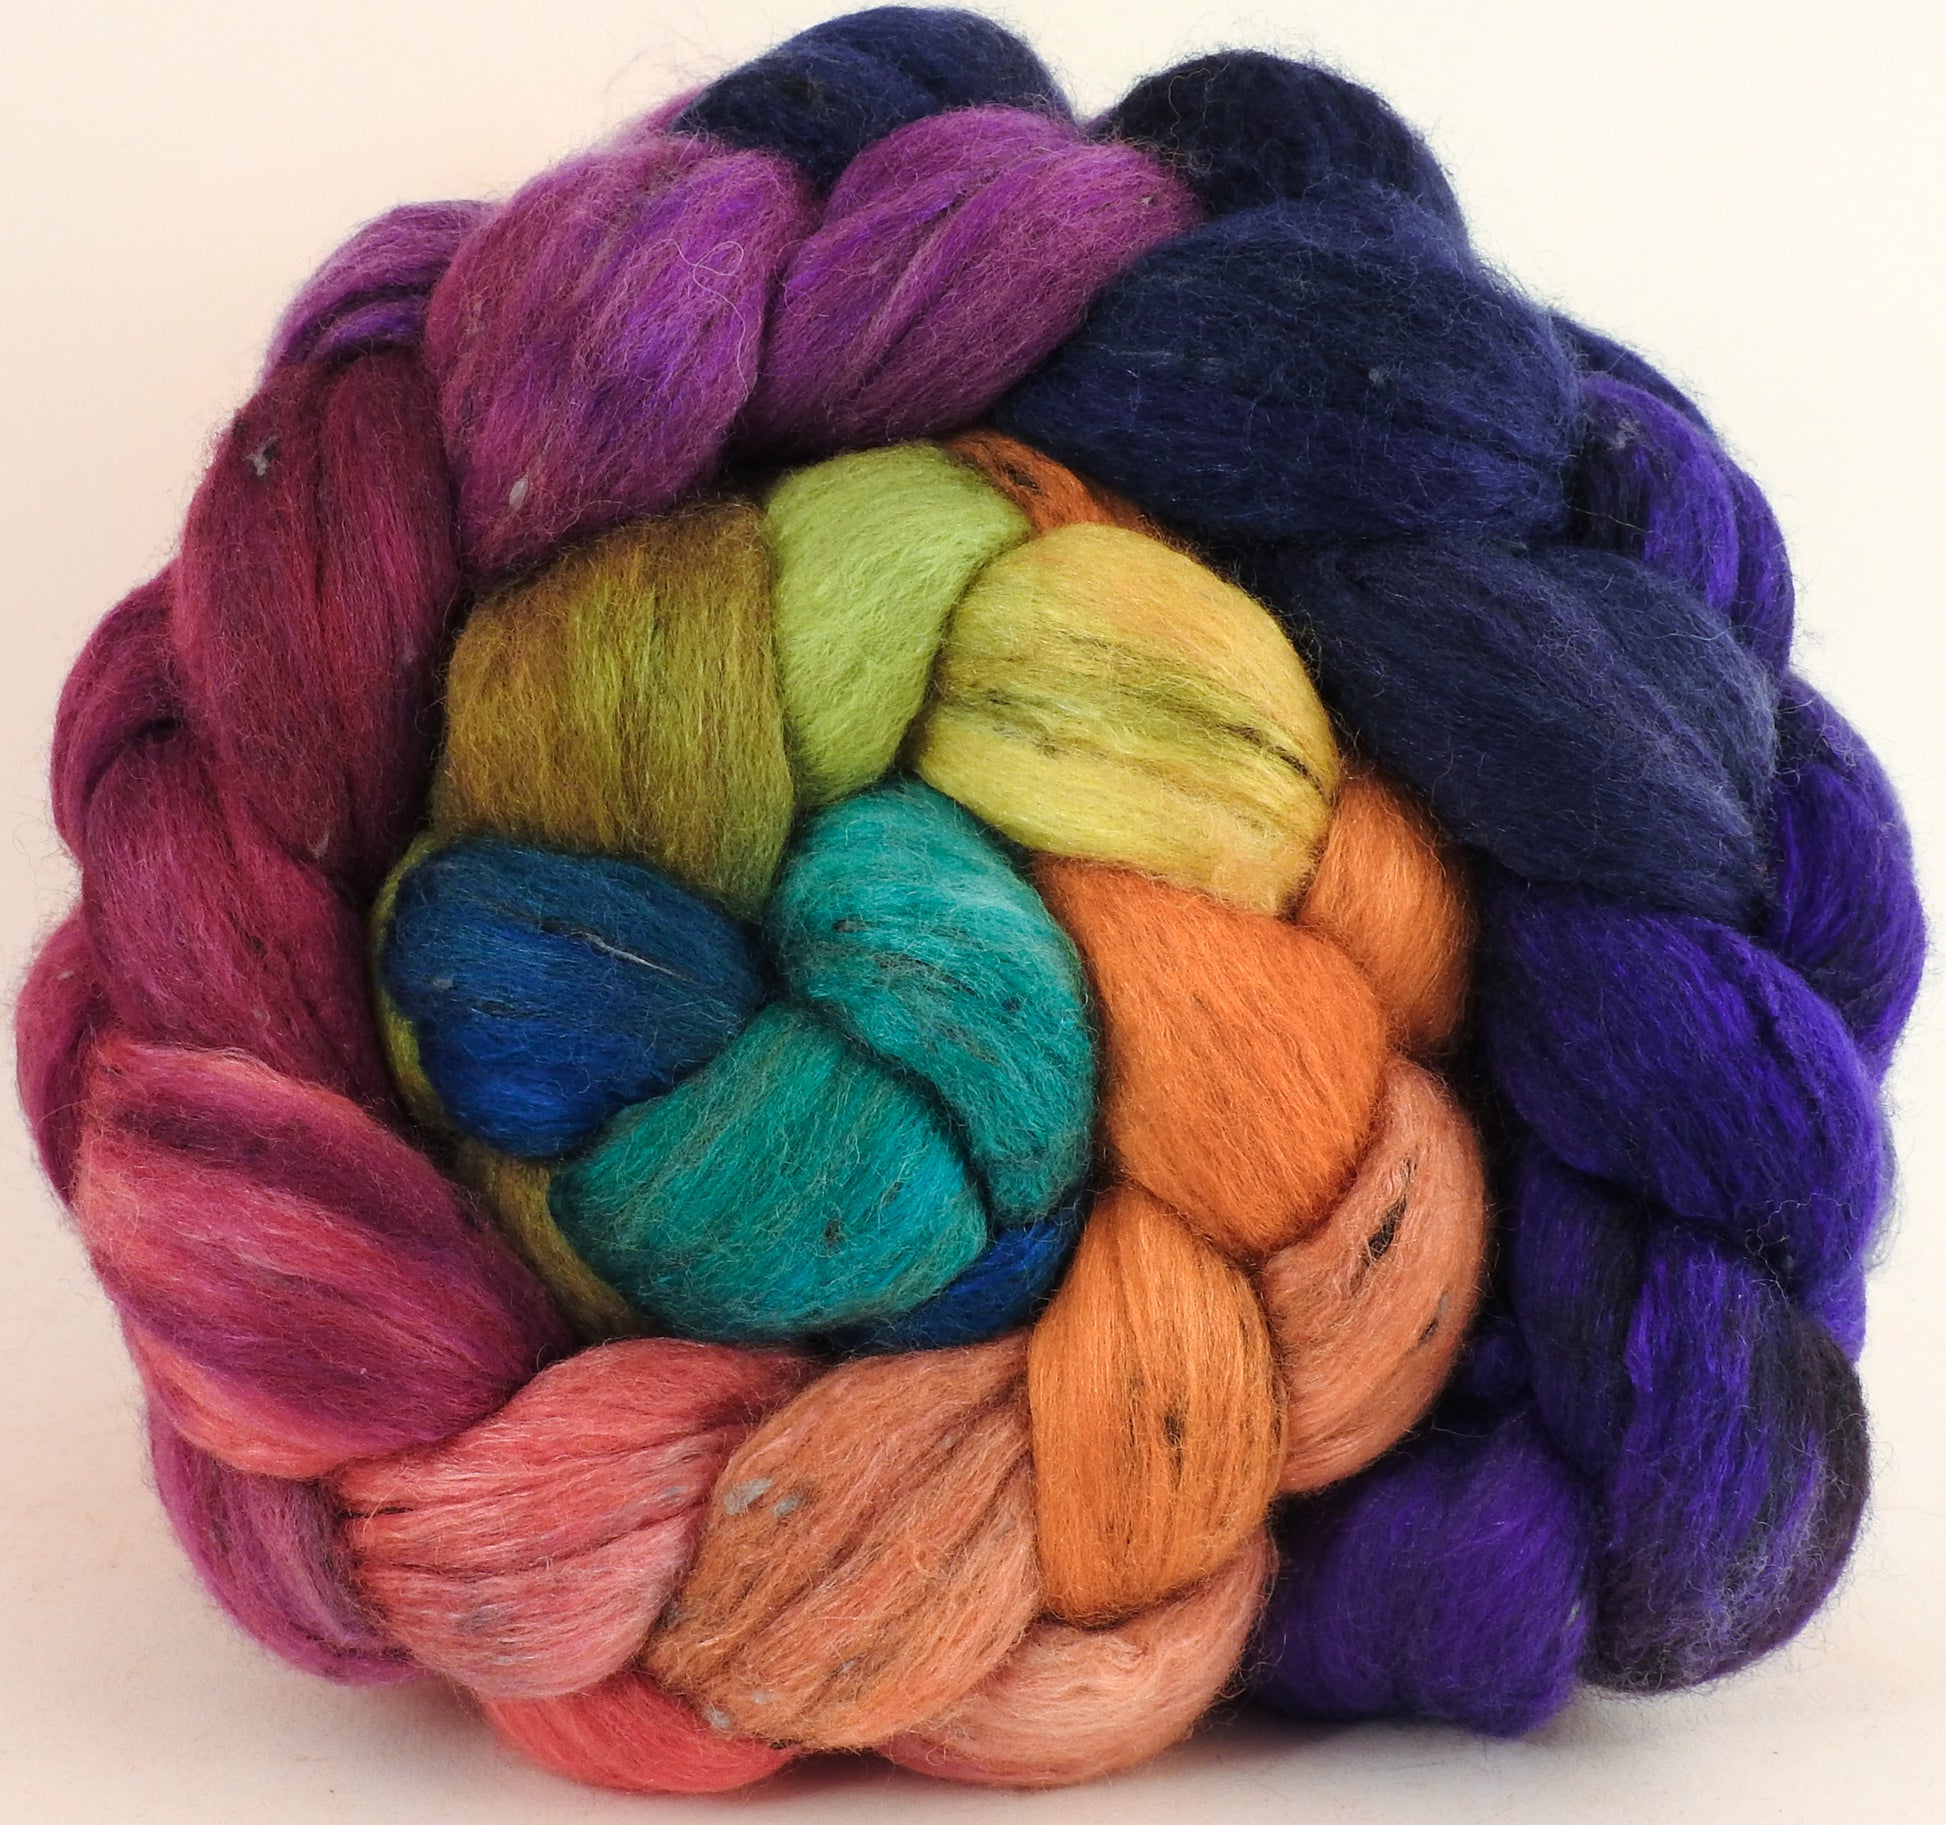 Batt in a Braid #49 -Yarn bombing (5.6 oz) - Polwarth/ Mulberry Silk/ Tweed Blend (50/25/25) - Inglenook Fibers